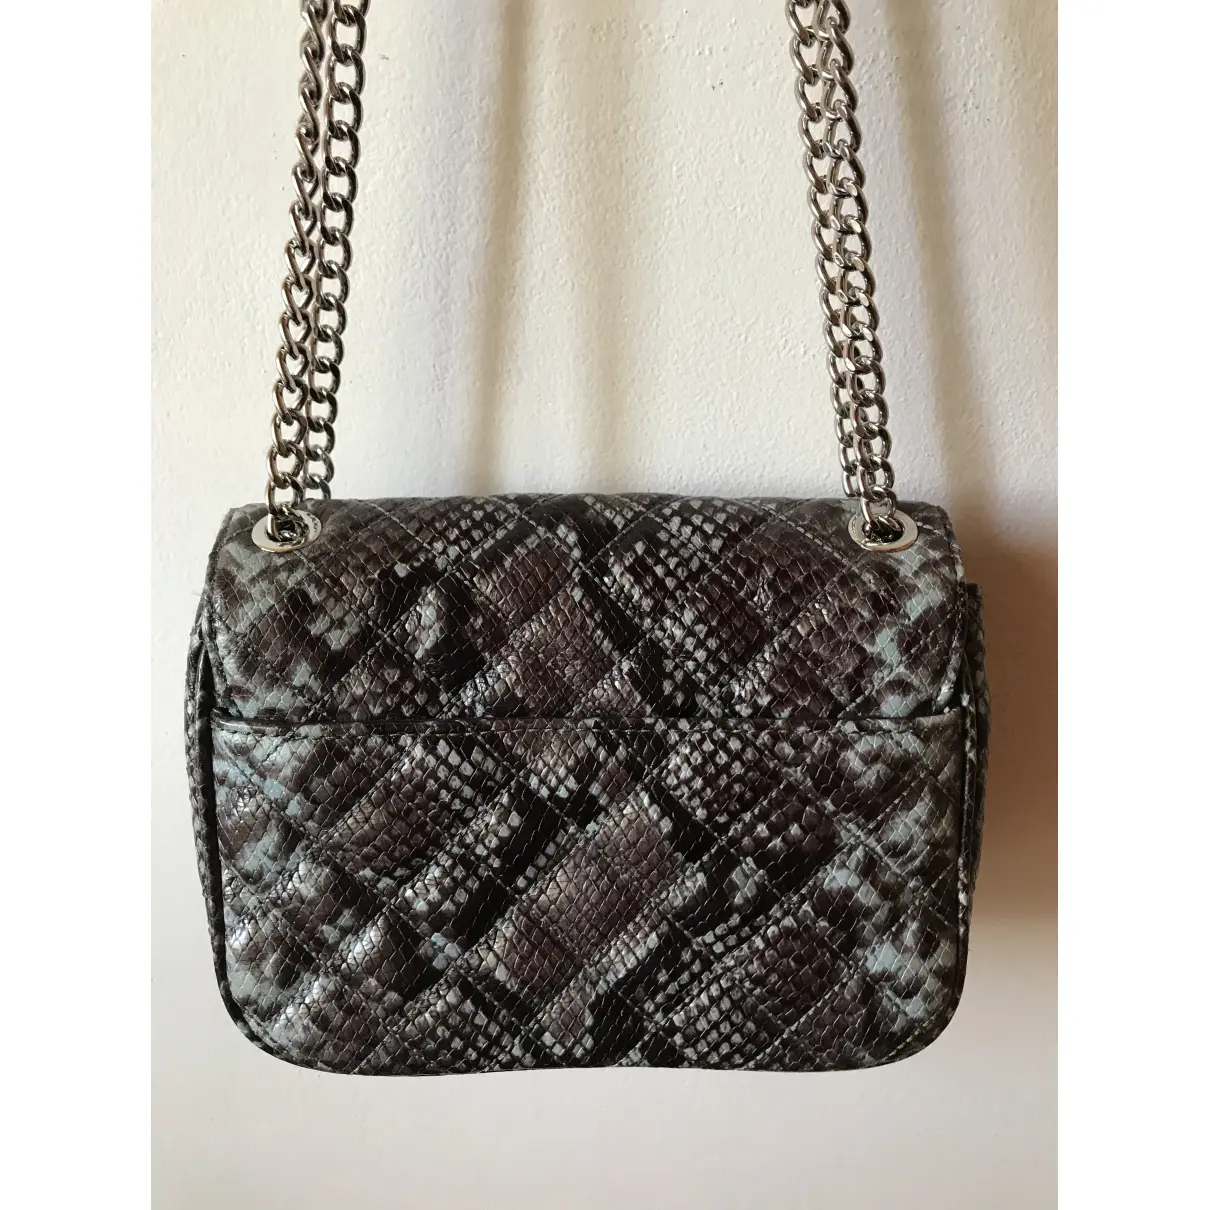 Buy Michael Kors Vivianne leather handbag online